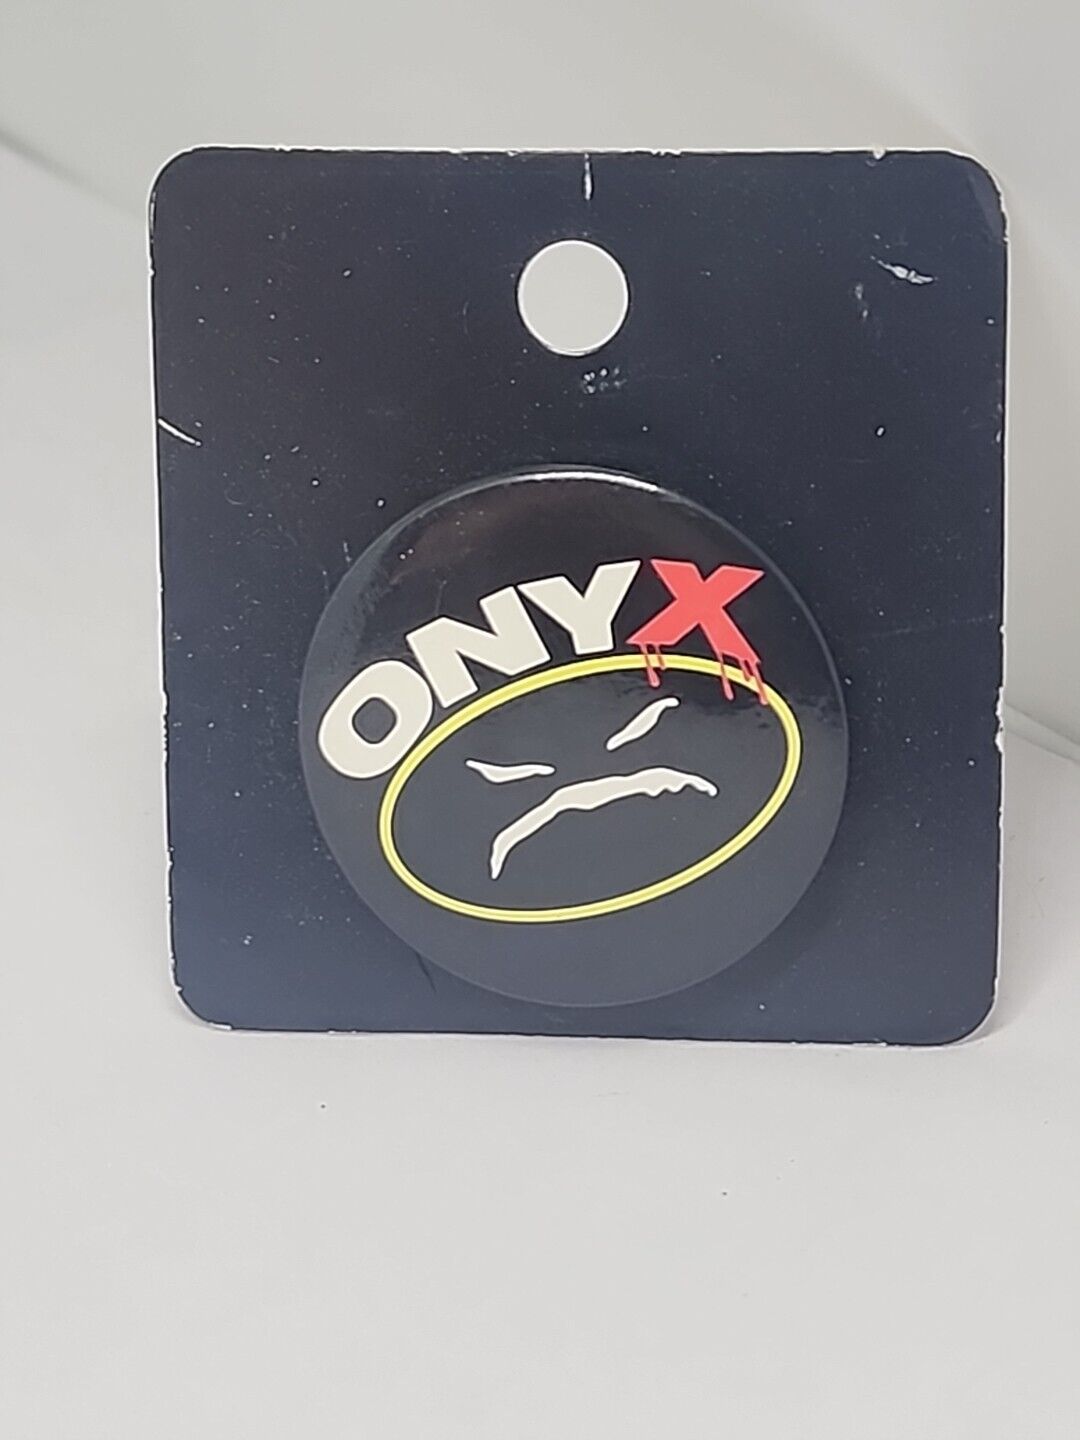 USA VINTAGE 90’s ONYX PINBACK Pin Button BADGE 1.5” Button Exchange New